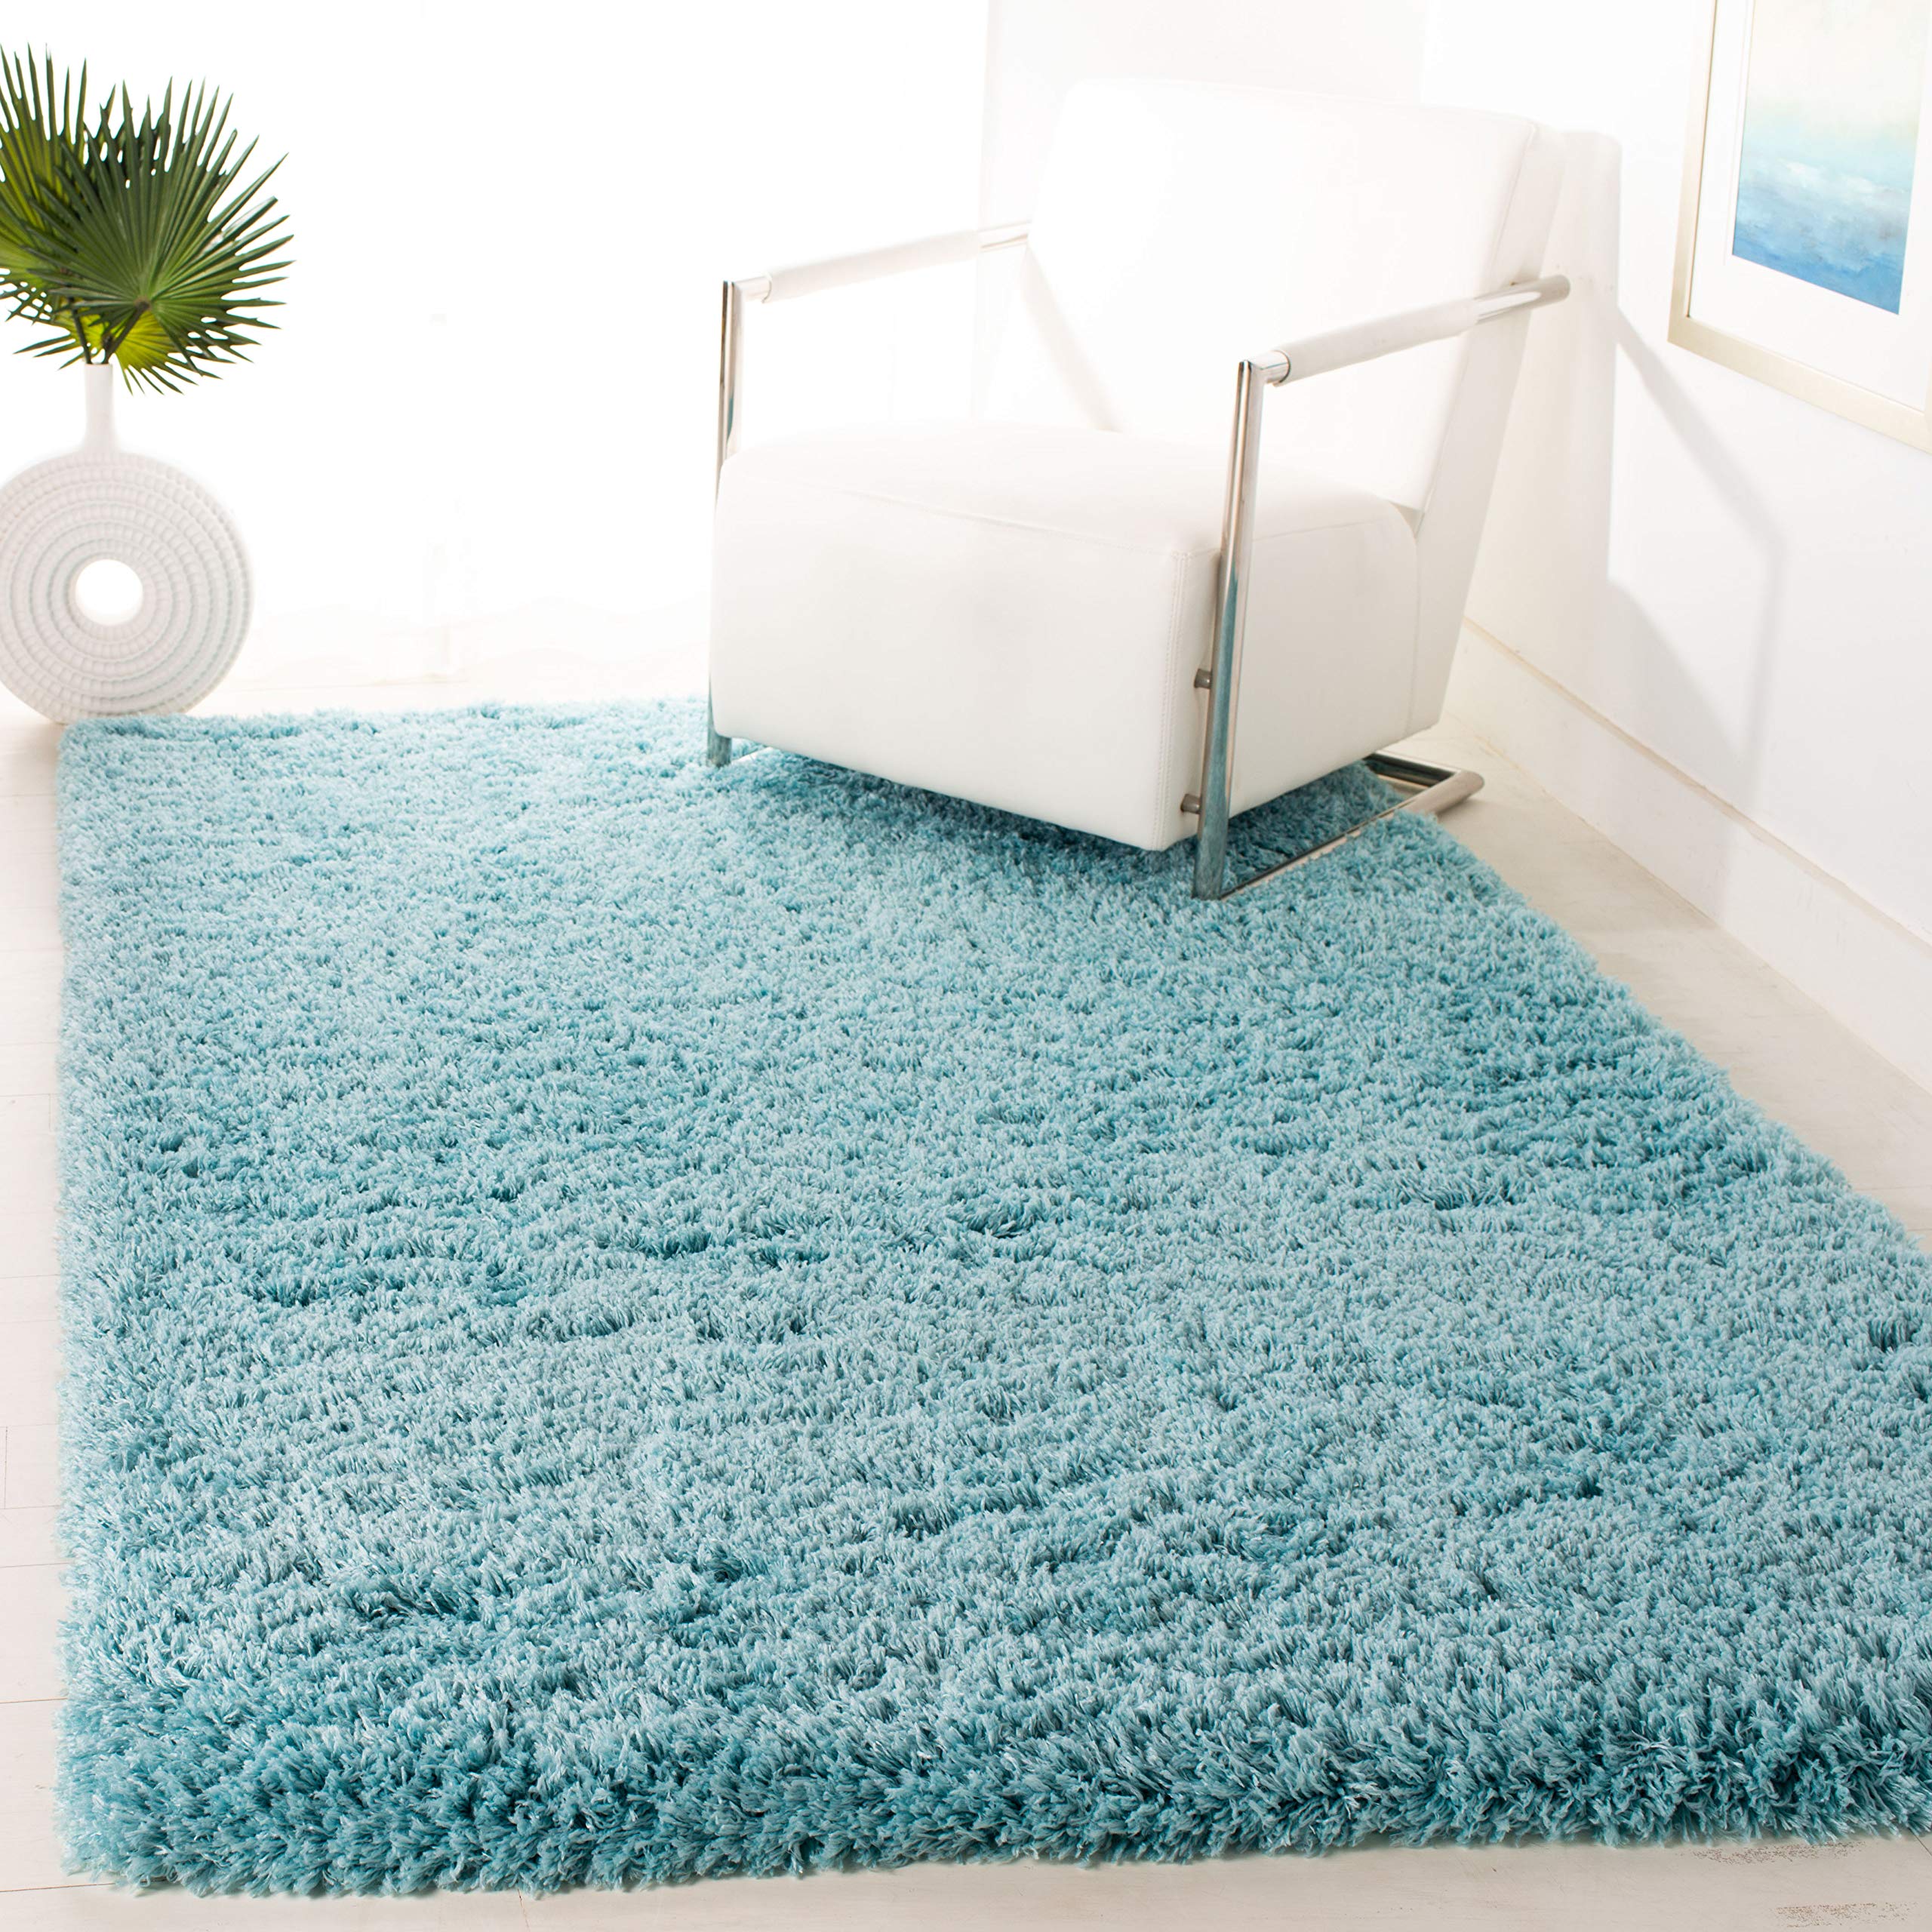 Safavieh Polar Shag 系列特色地毯 - 4 英寸 x 6 英寸，浅绿松石色，纯色迷人设计，不...